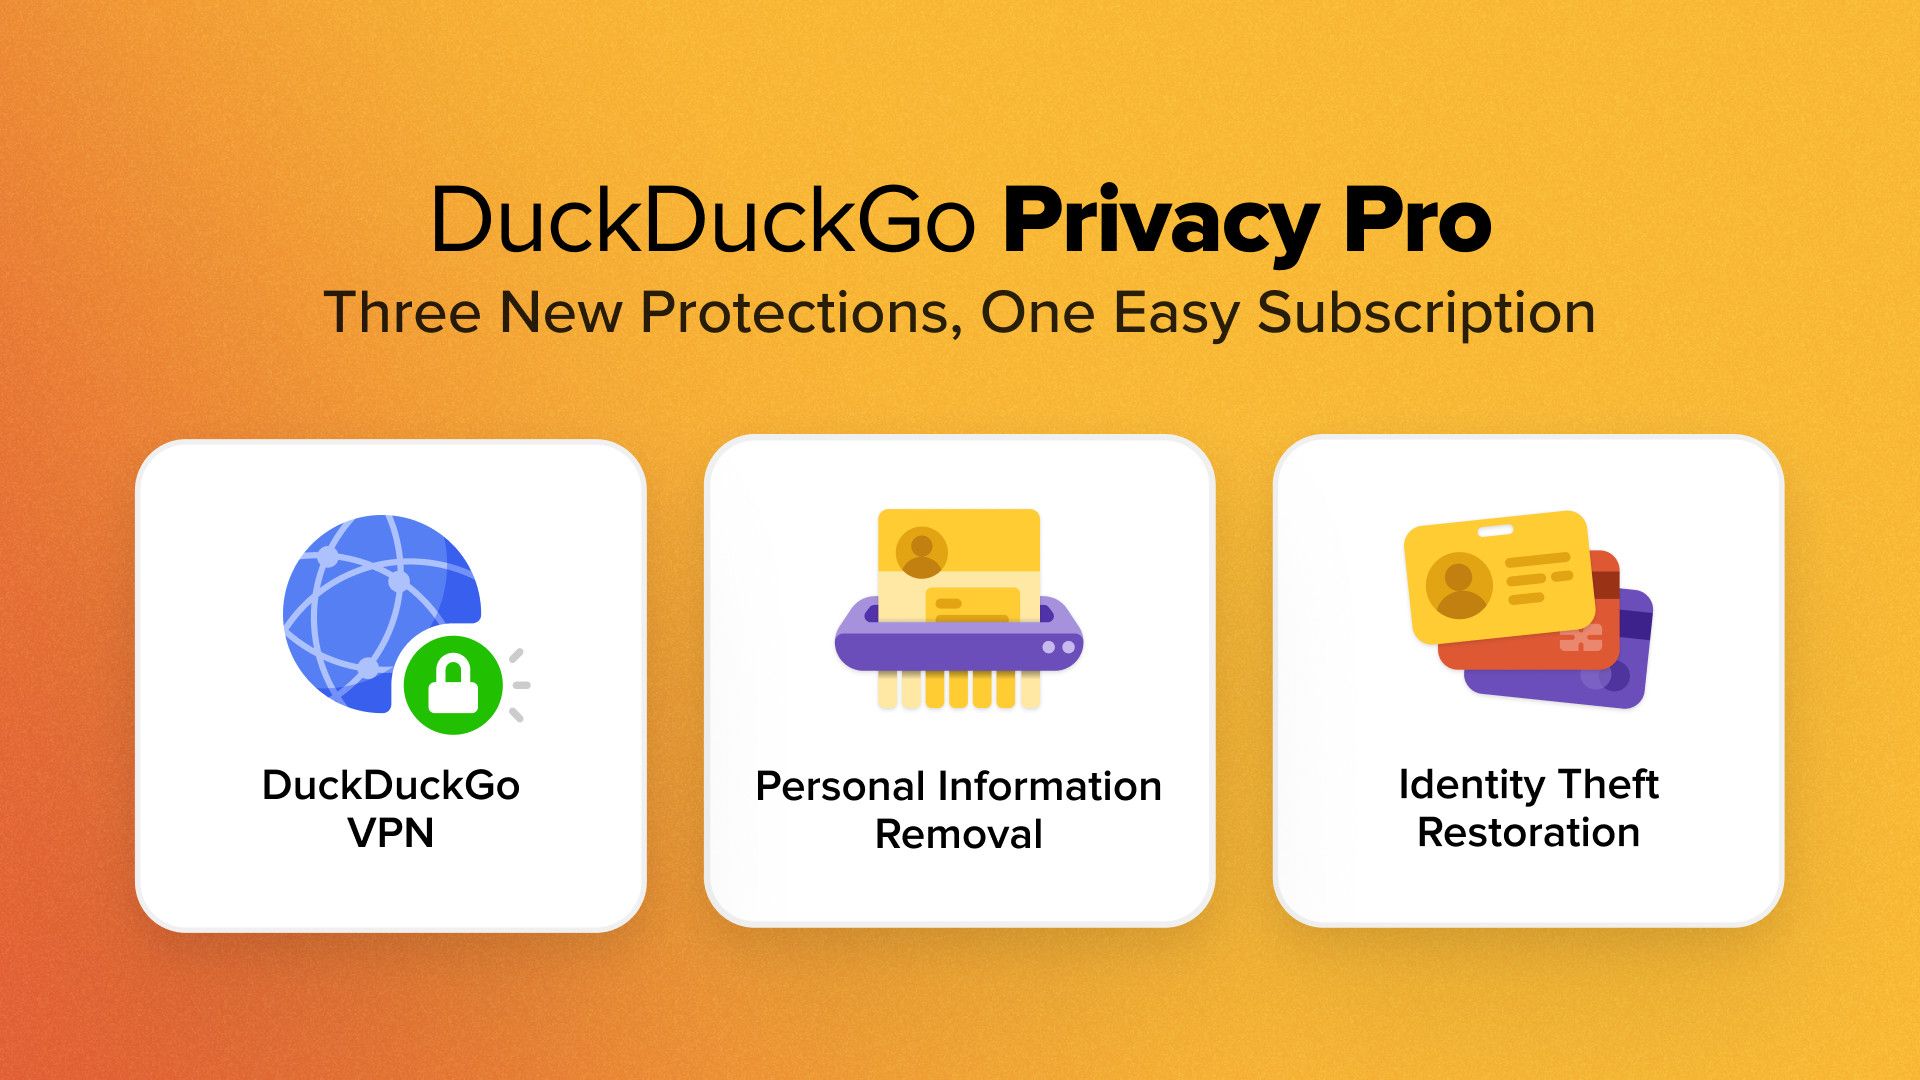 QnA VBage DuckDuckGo Privacy Pro